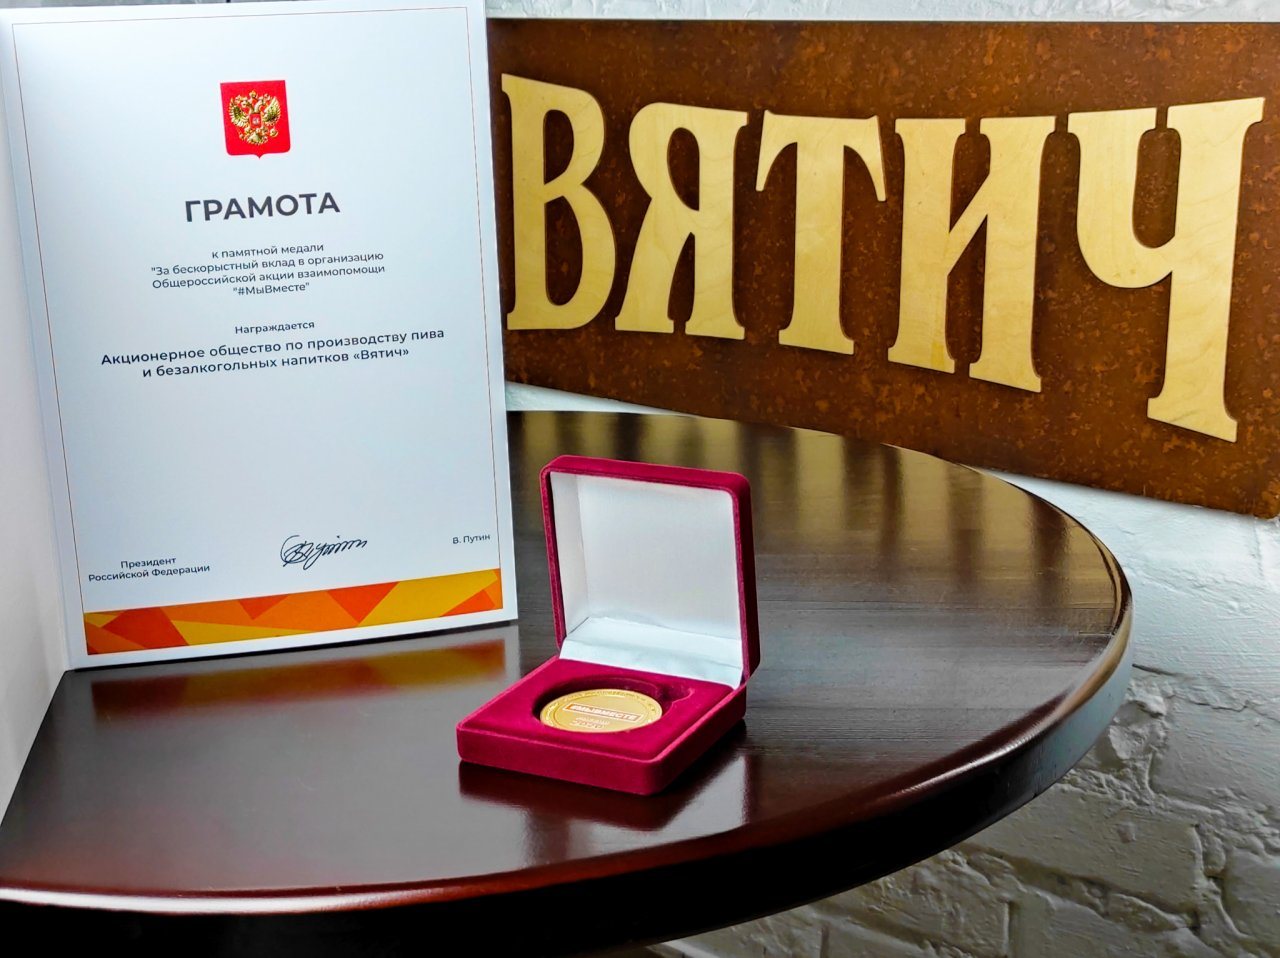 Владимир Путин наградил работников «Вятича» за помощь в борьбе с COVID-19